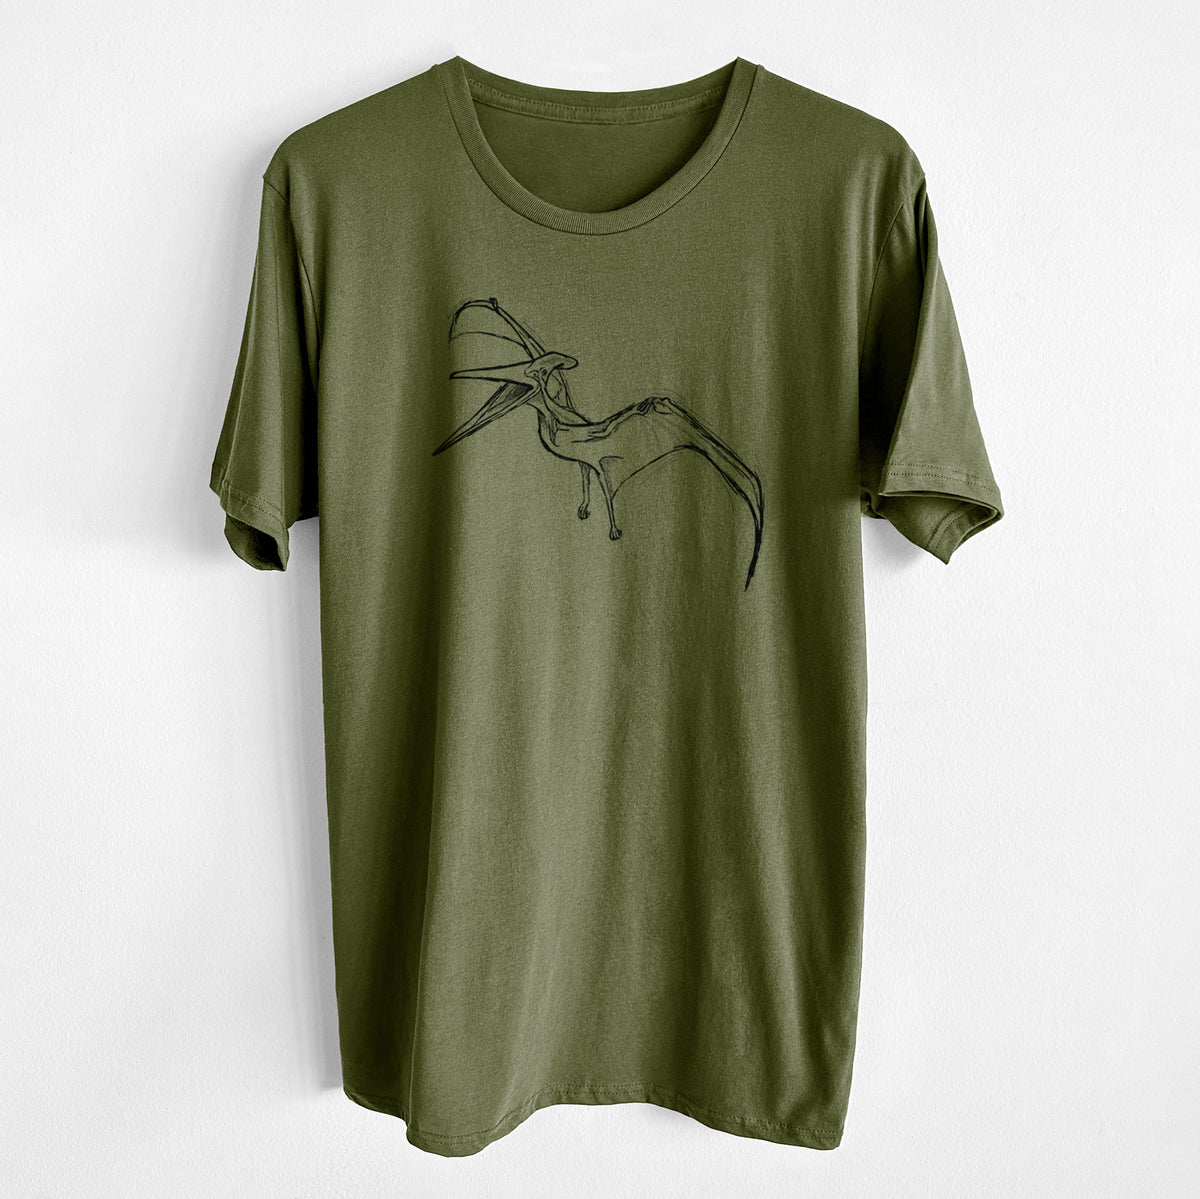 Pteranodon Longiceps - Unisex Crewneck - Made in USA - 100% Organic Cotton